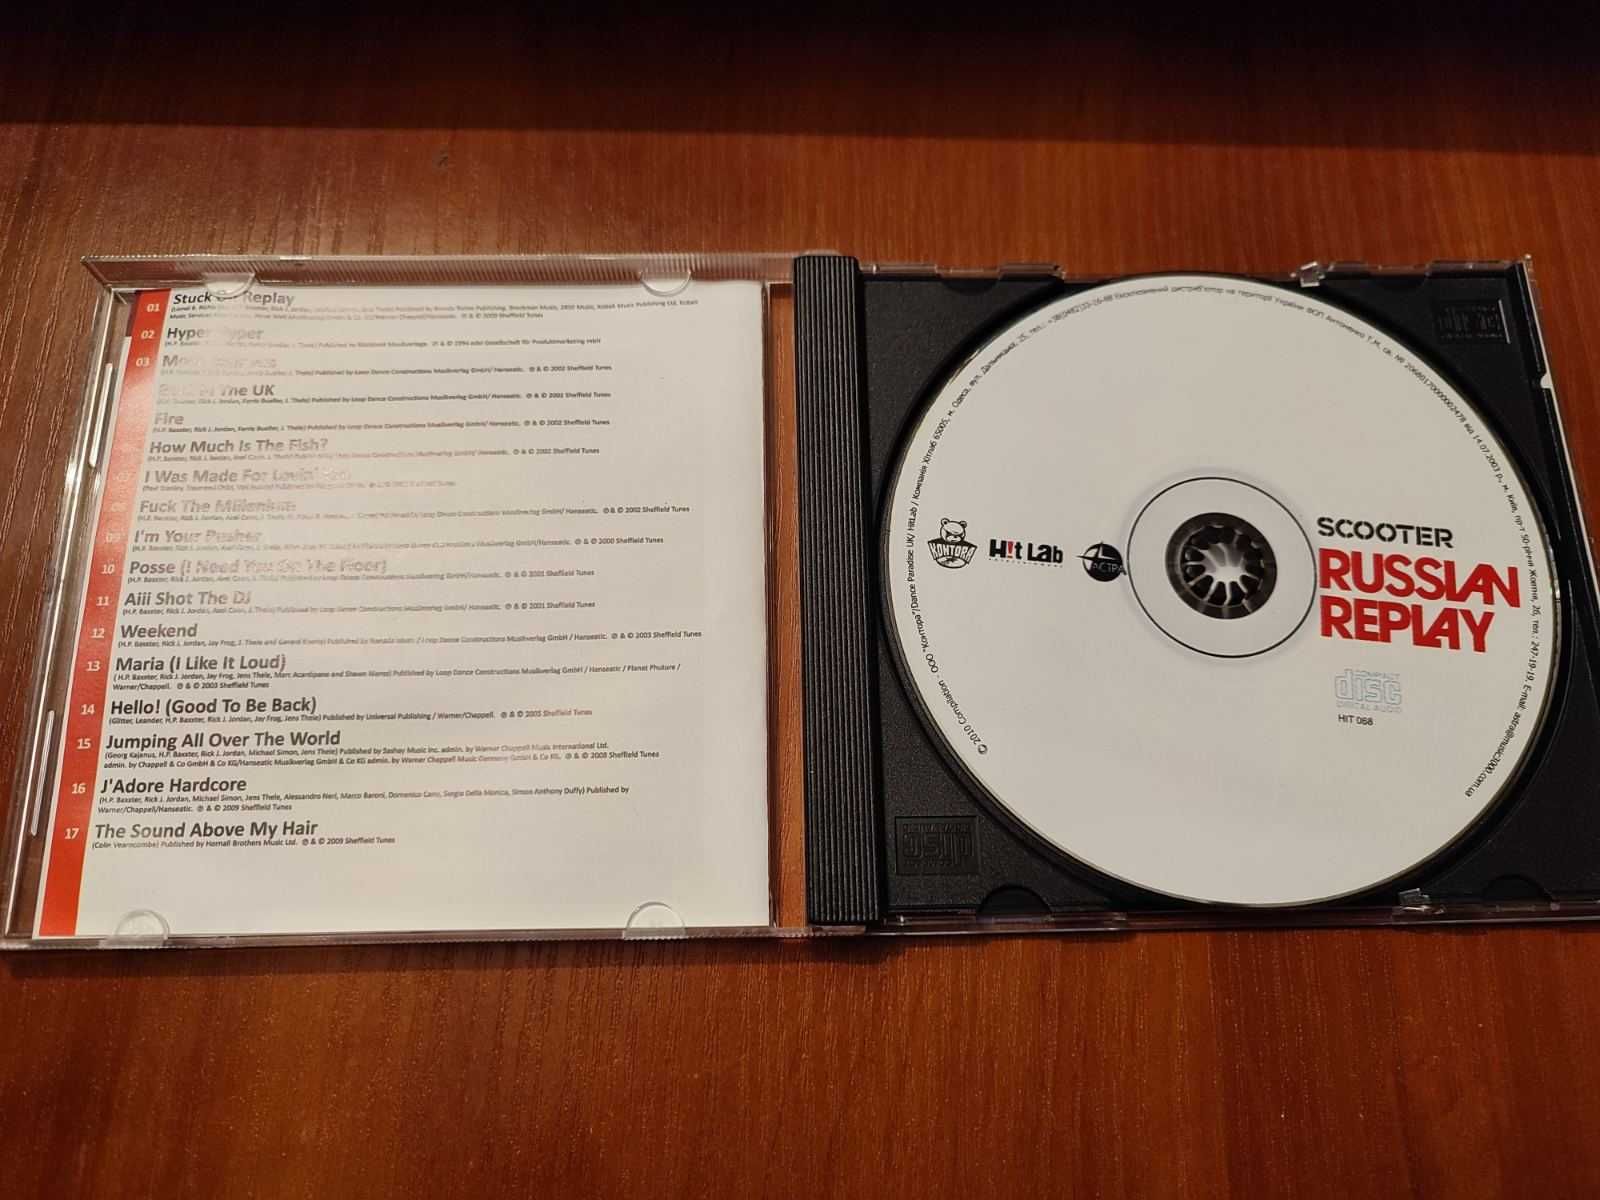 Музыкальный CD Scooter альбом Russian Replay 2010 год.